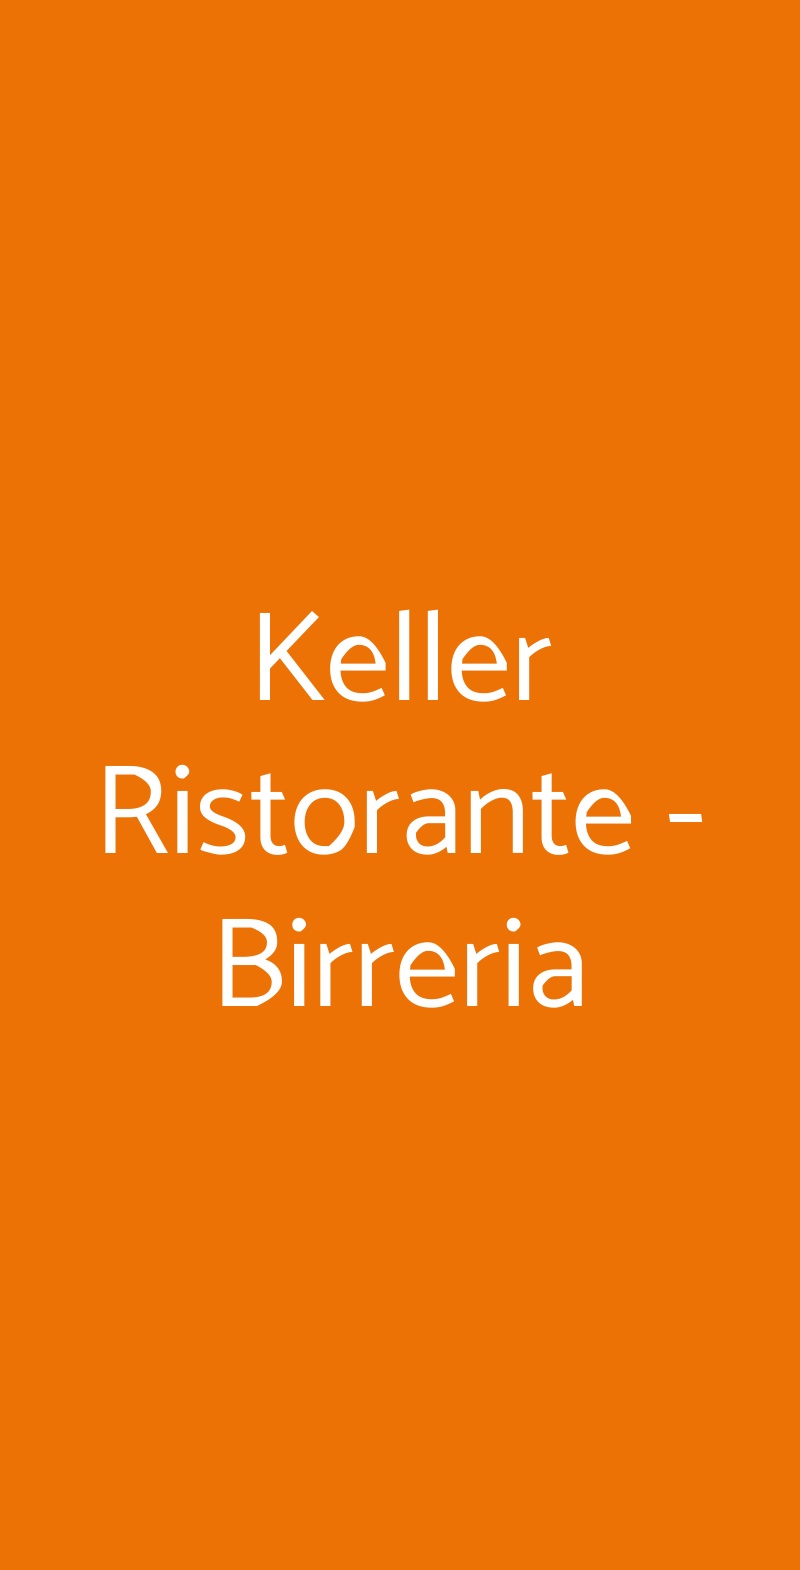 Keller Ristorante - Birreria Modena menù 1 pagina